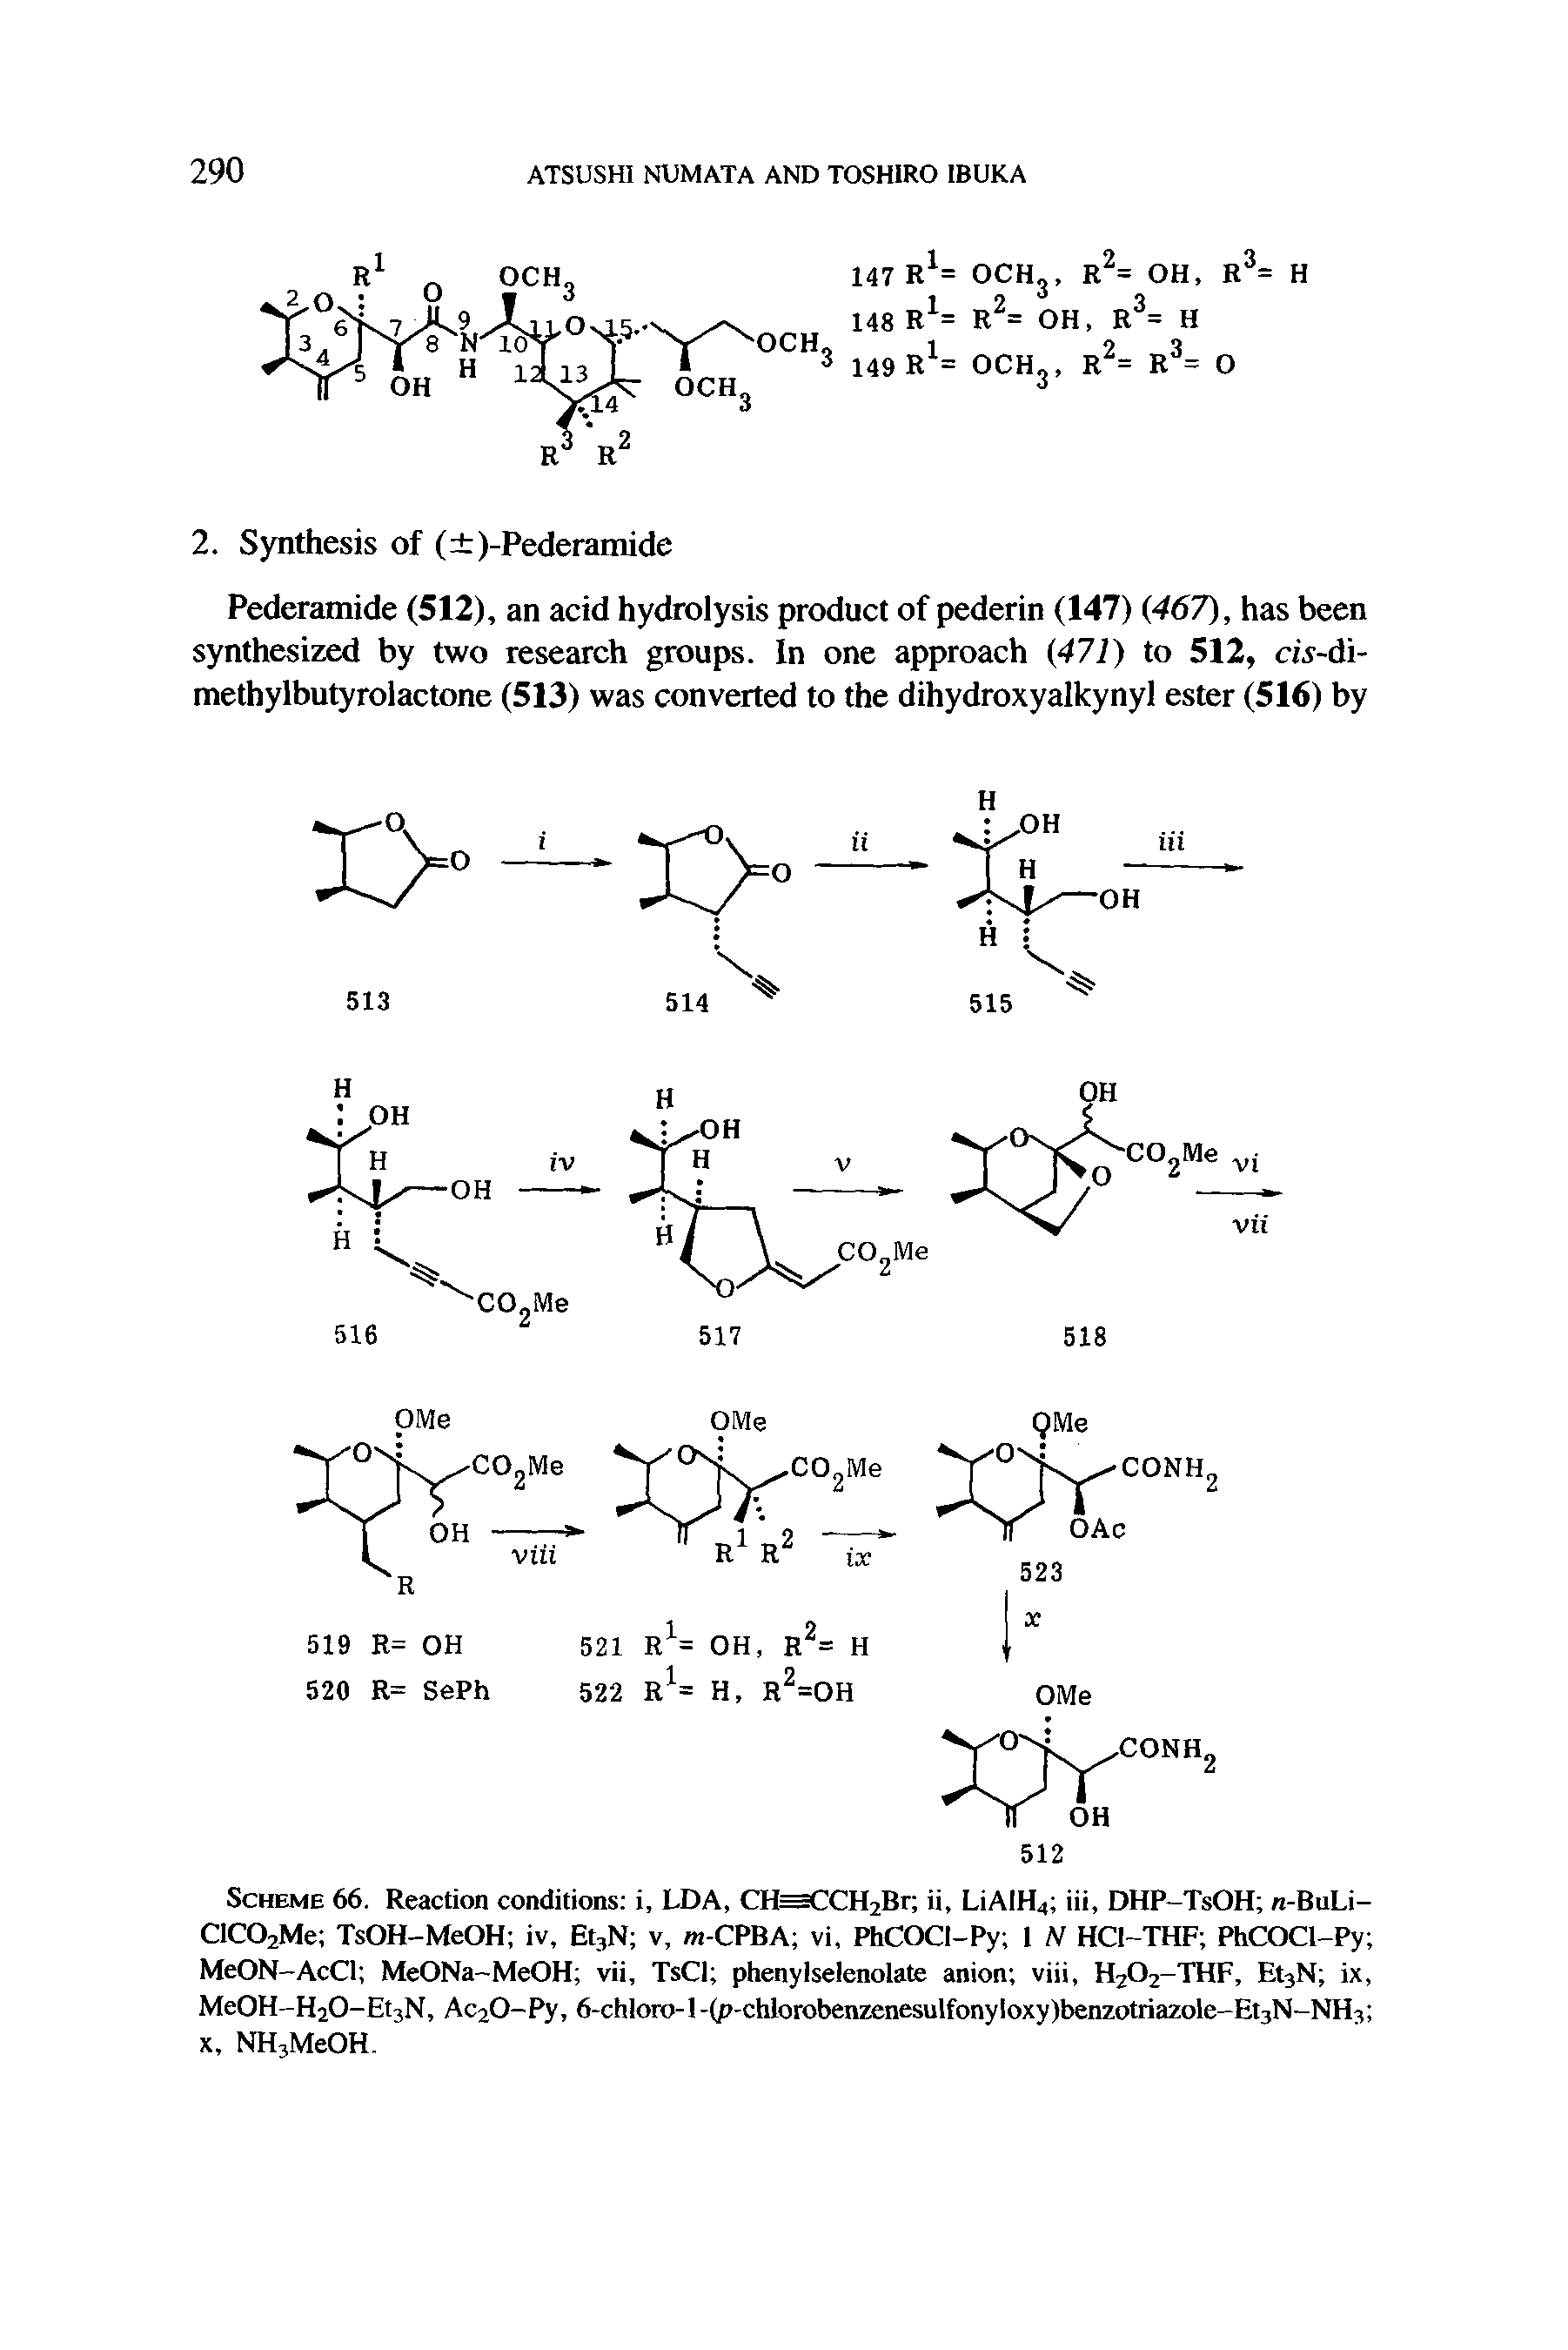 Scheme 66. Reaction conditions i, LDA, CH=CCH2Br ii, LiAlH4 iii, DHP-TsOH n-BuLi-ClCOzMe TsOH-MeOH iv, EijN v, m-CPBA vi, PhCOCI-Py 1 N HCl-THF PhCOCl-Py MeON-AcCl MeONa-MeOH vii, TsCI phenylselenolate anion viii, H2O2-THF, Et3N ix, MeOH-H20-Et3N, AcjO-Py, 6-chloro-l-(p-chlorobenzenesulfonyloxy)benzotriazole-Et3N-NH3 ...